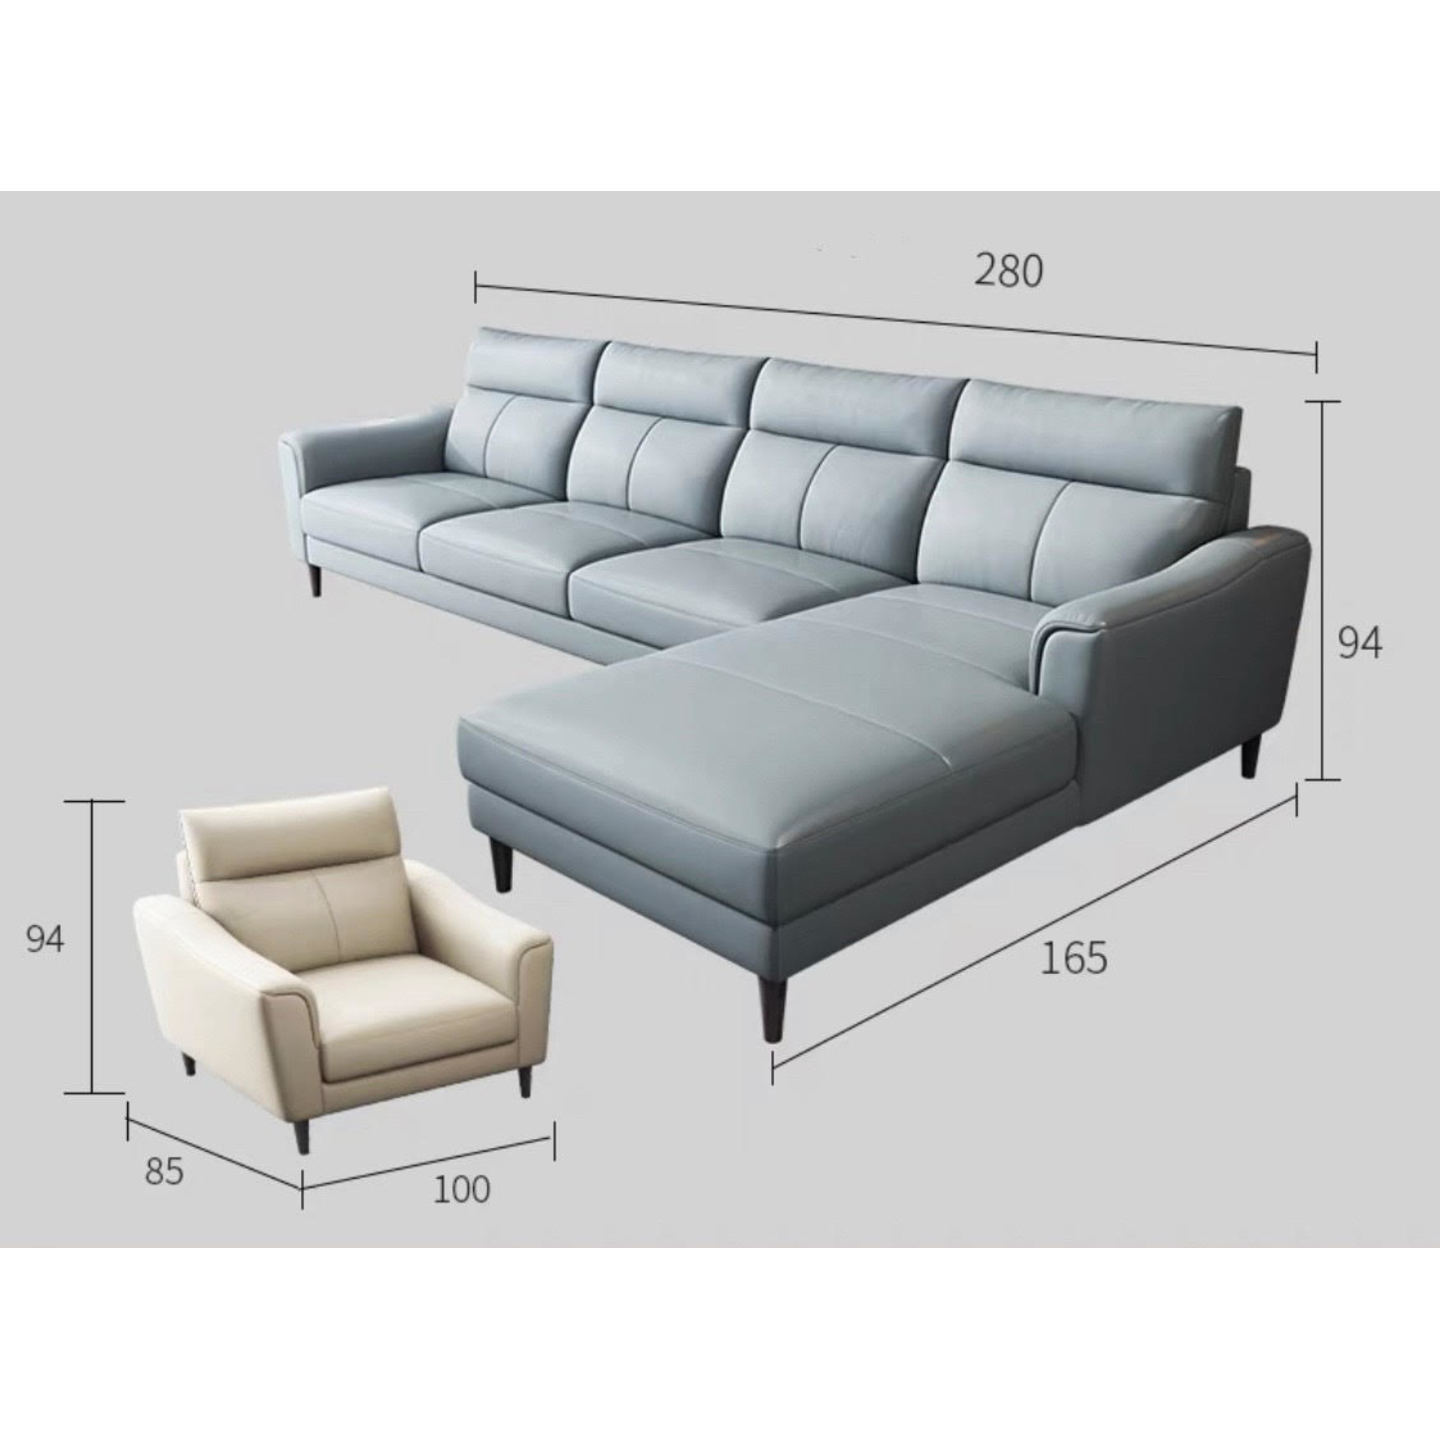 Nappa Premium Italian Sofa Contact Leather - Three + Concubine Seat + Single Seater